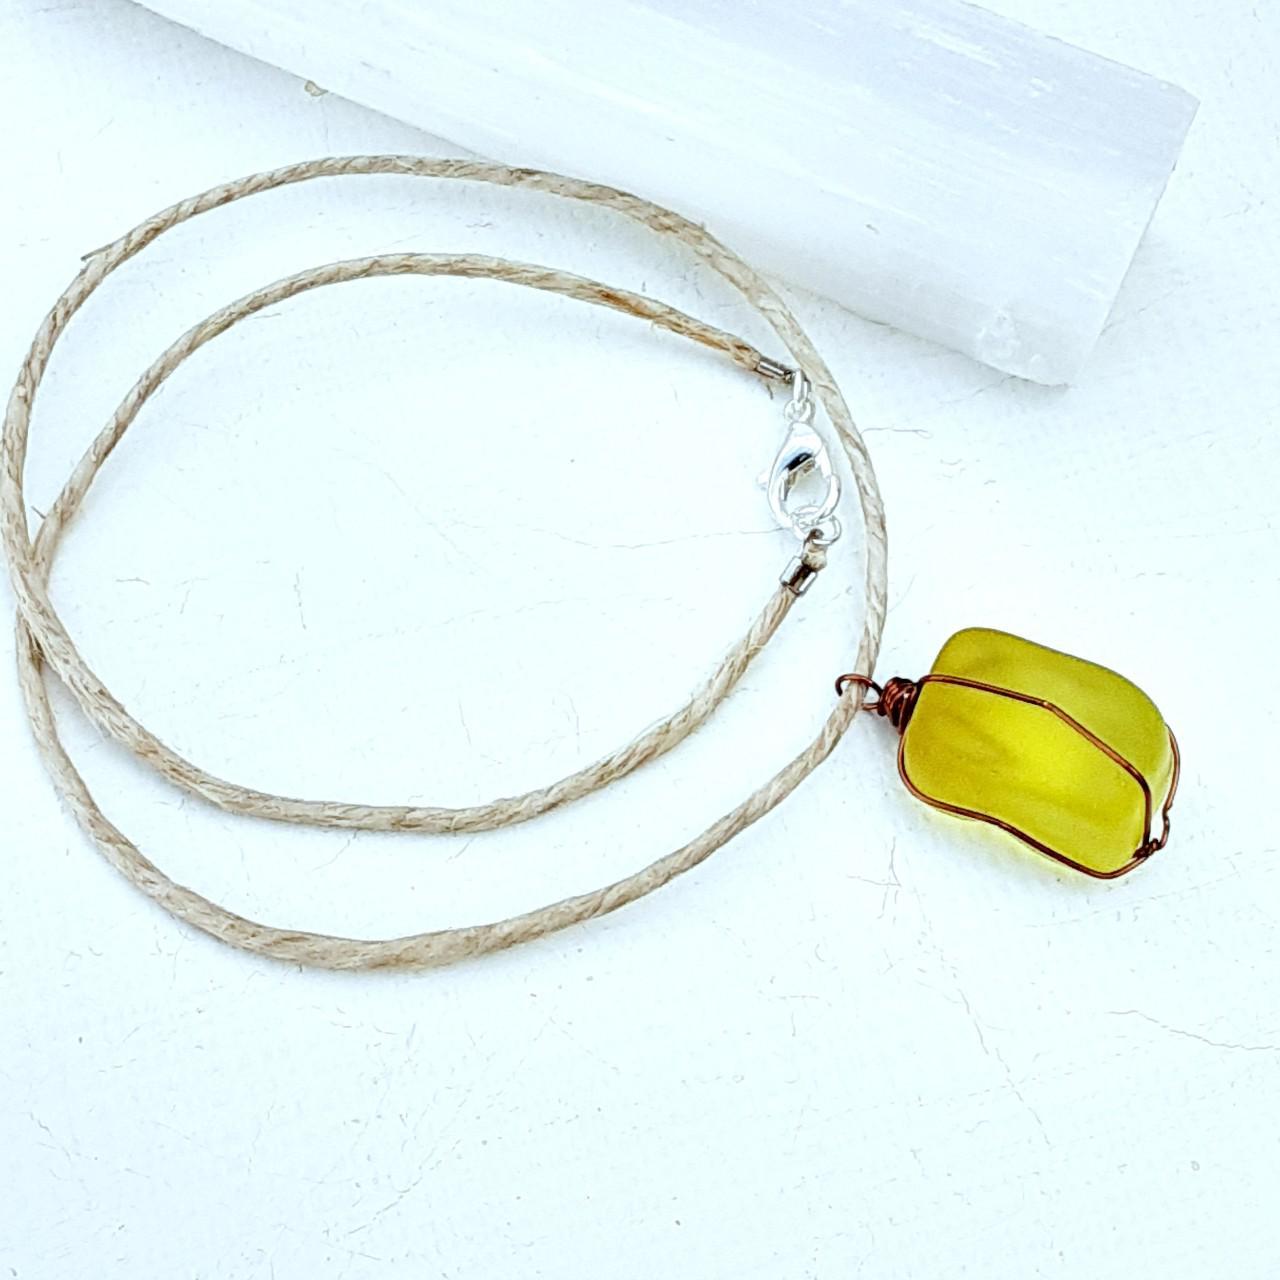 Product Image 2 - Hemp choker necklace. 
Bronze wire